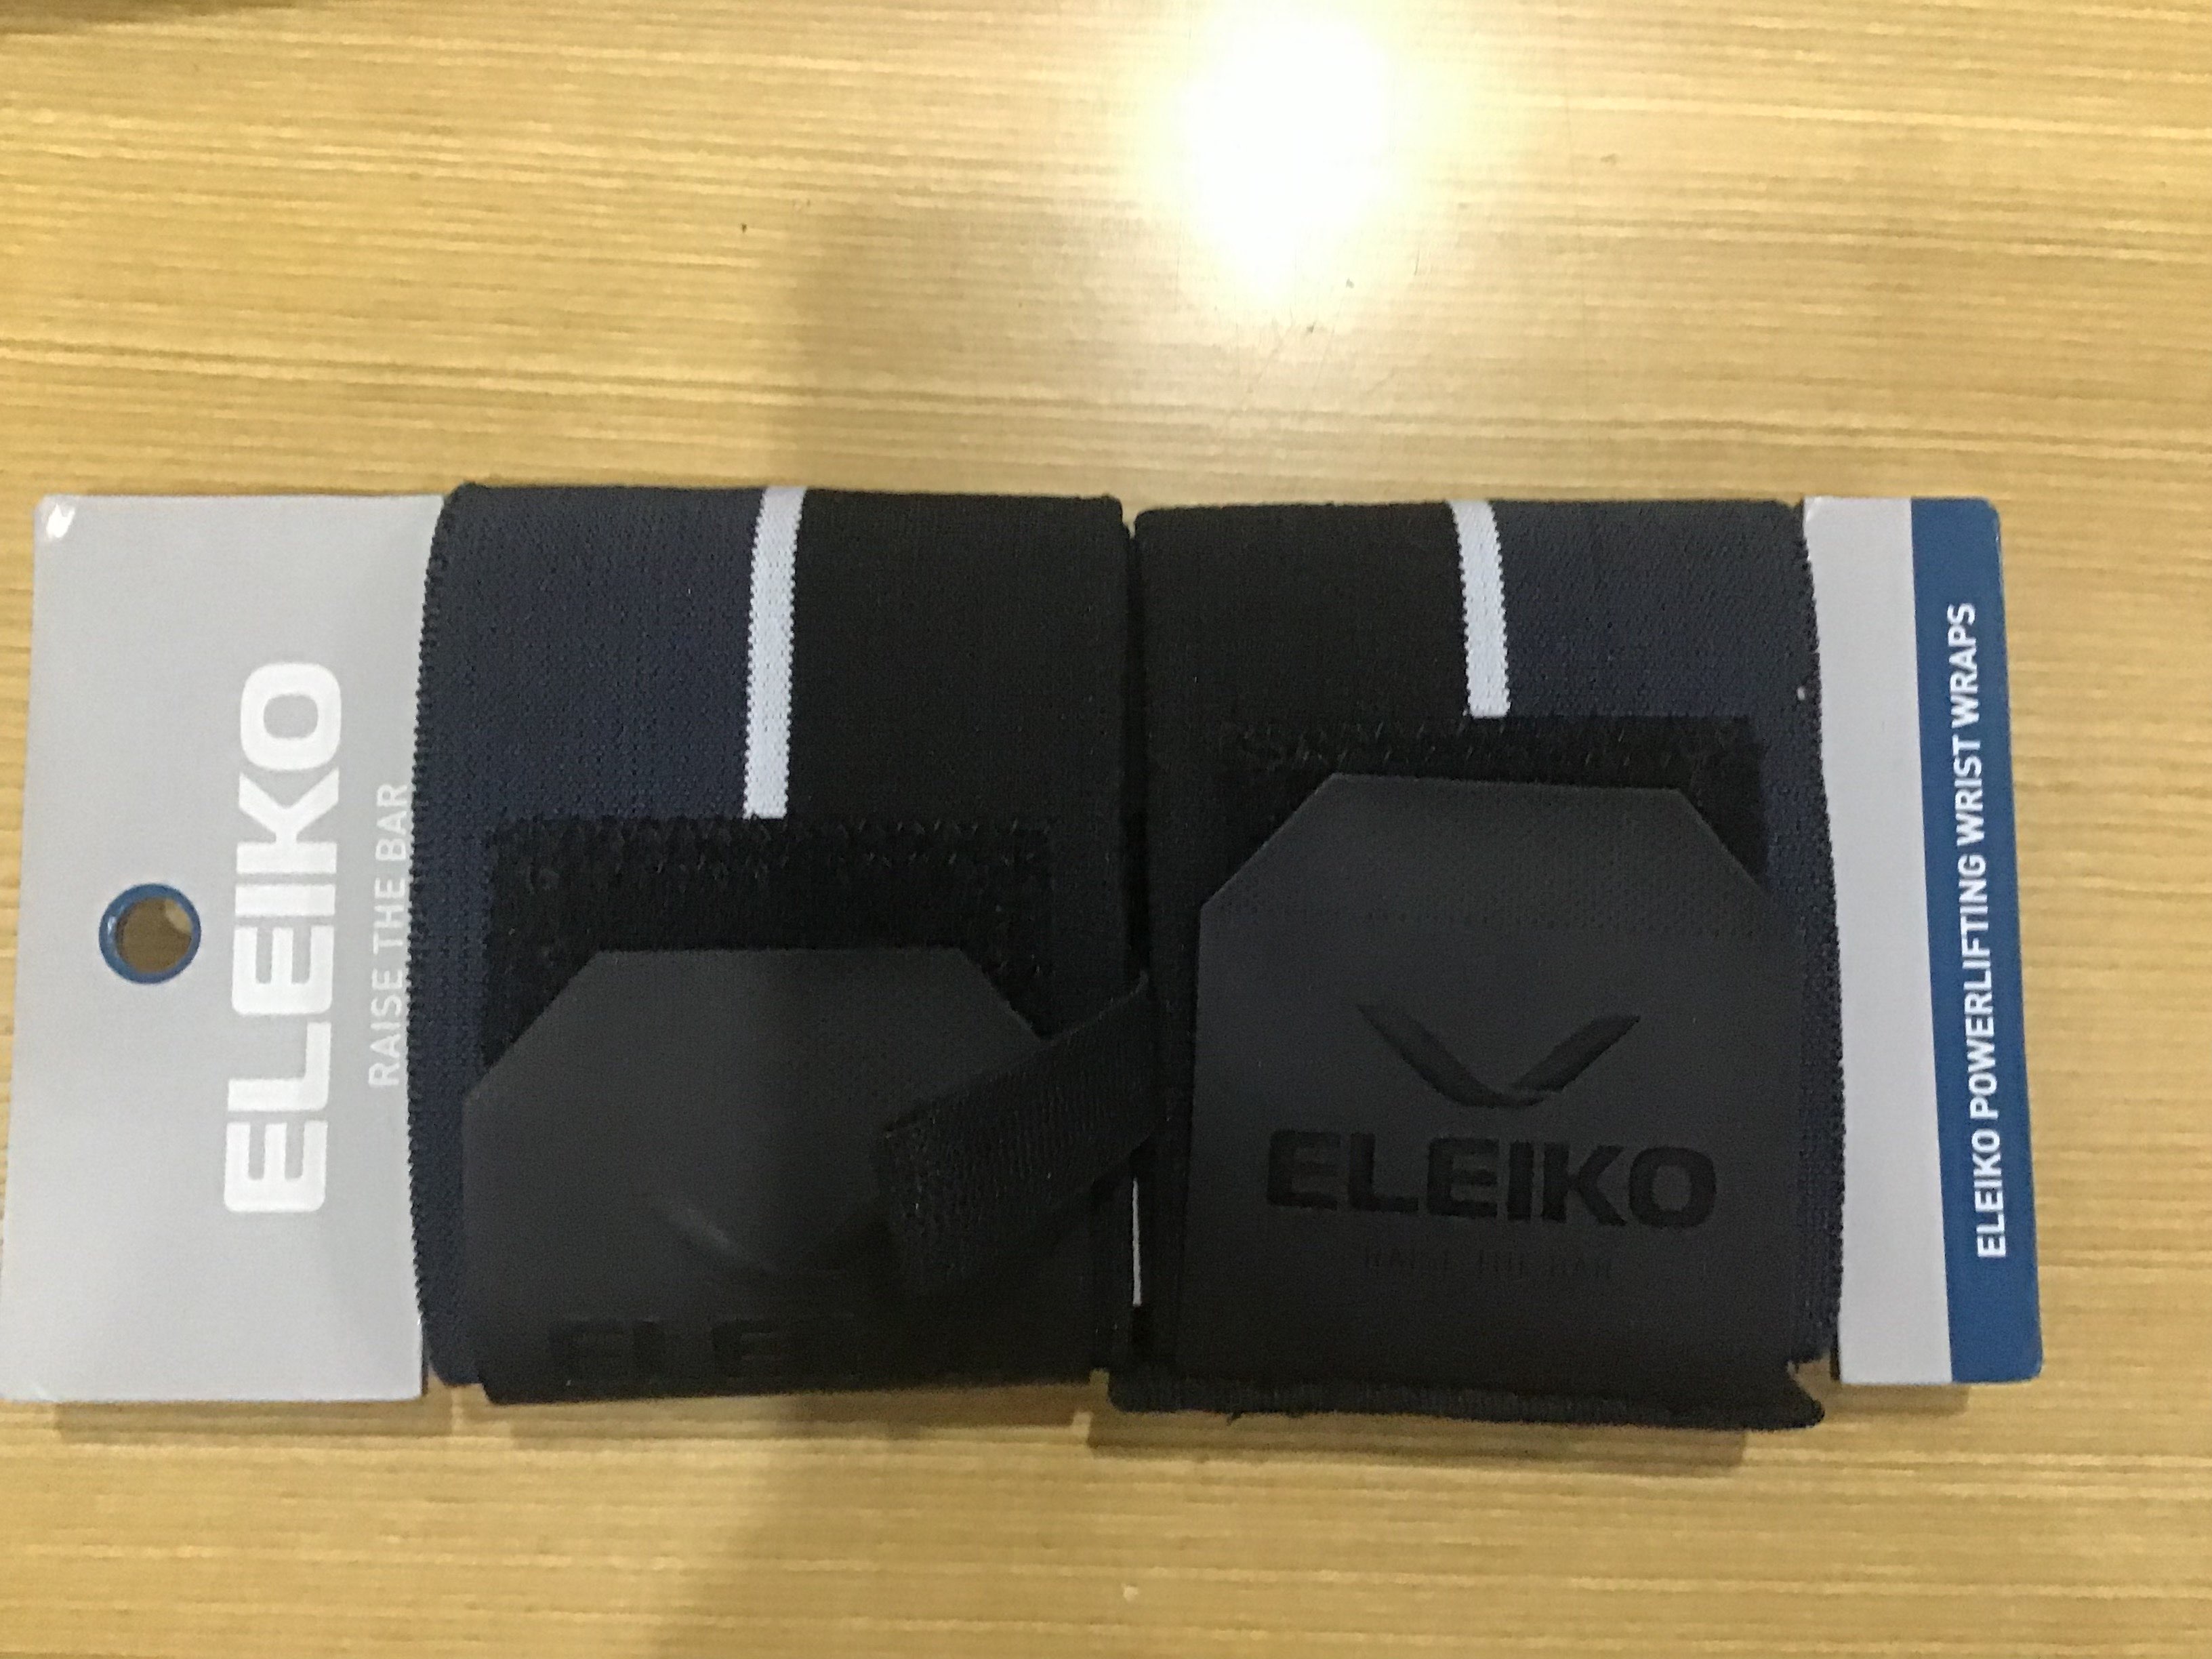 Eleiko weightlifting wrist wrap (titan grey) 